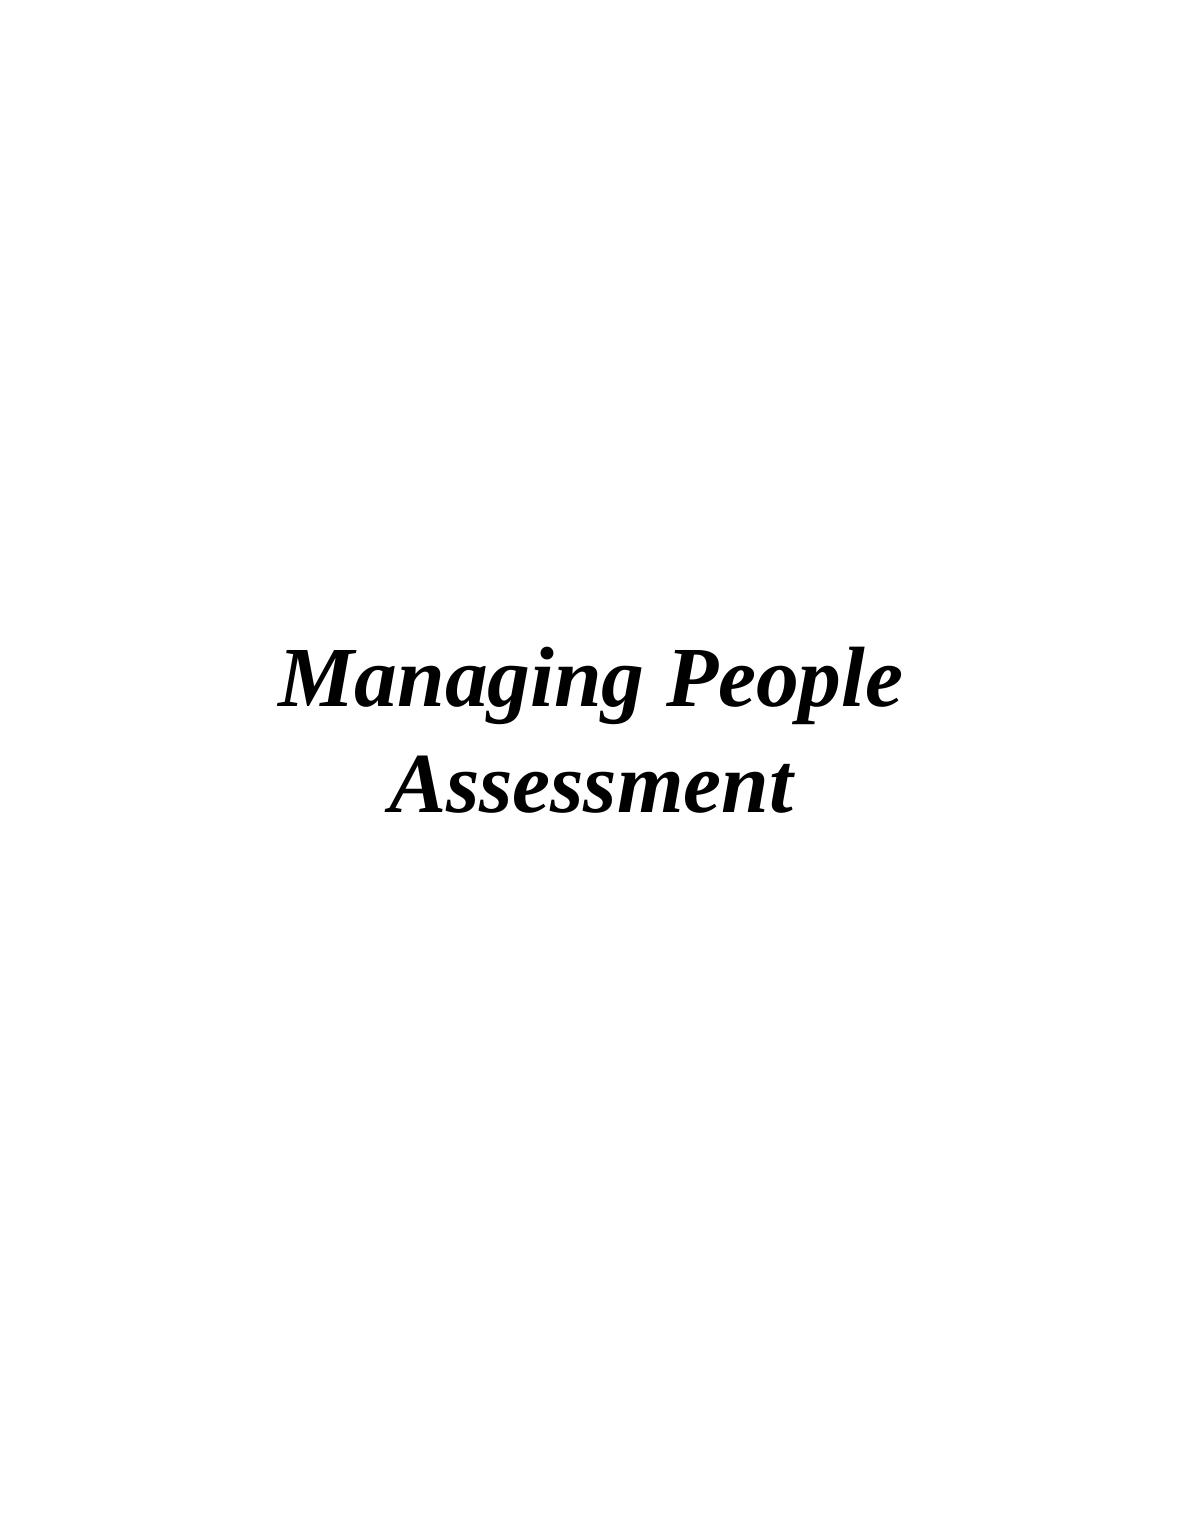 Managing People: Leadership Development, Strategic Learning, Training and Development, Performance Management_1